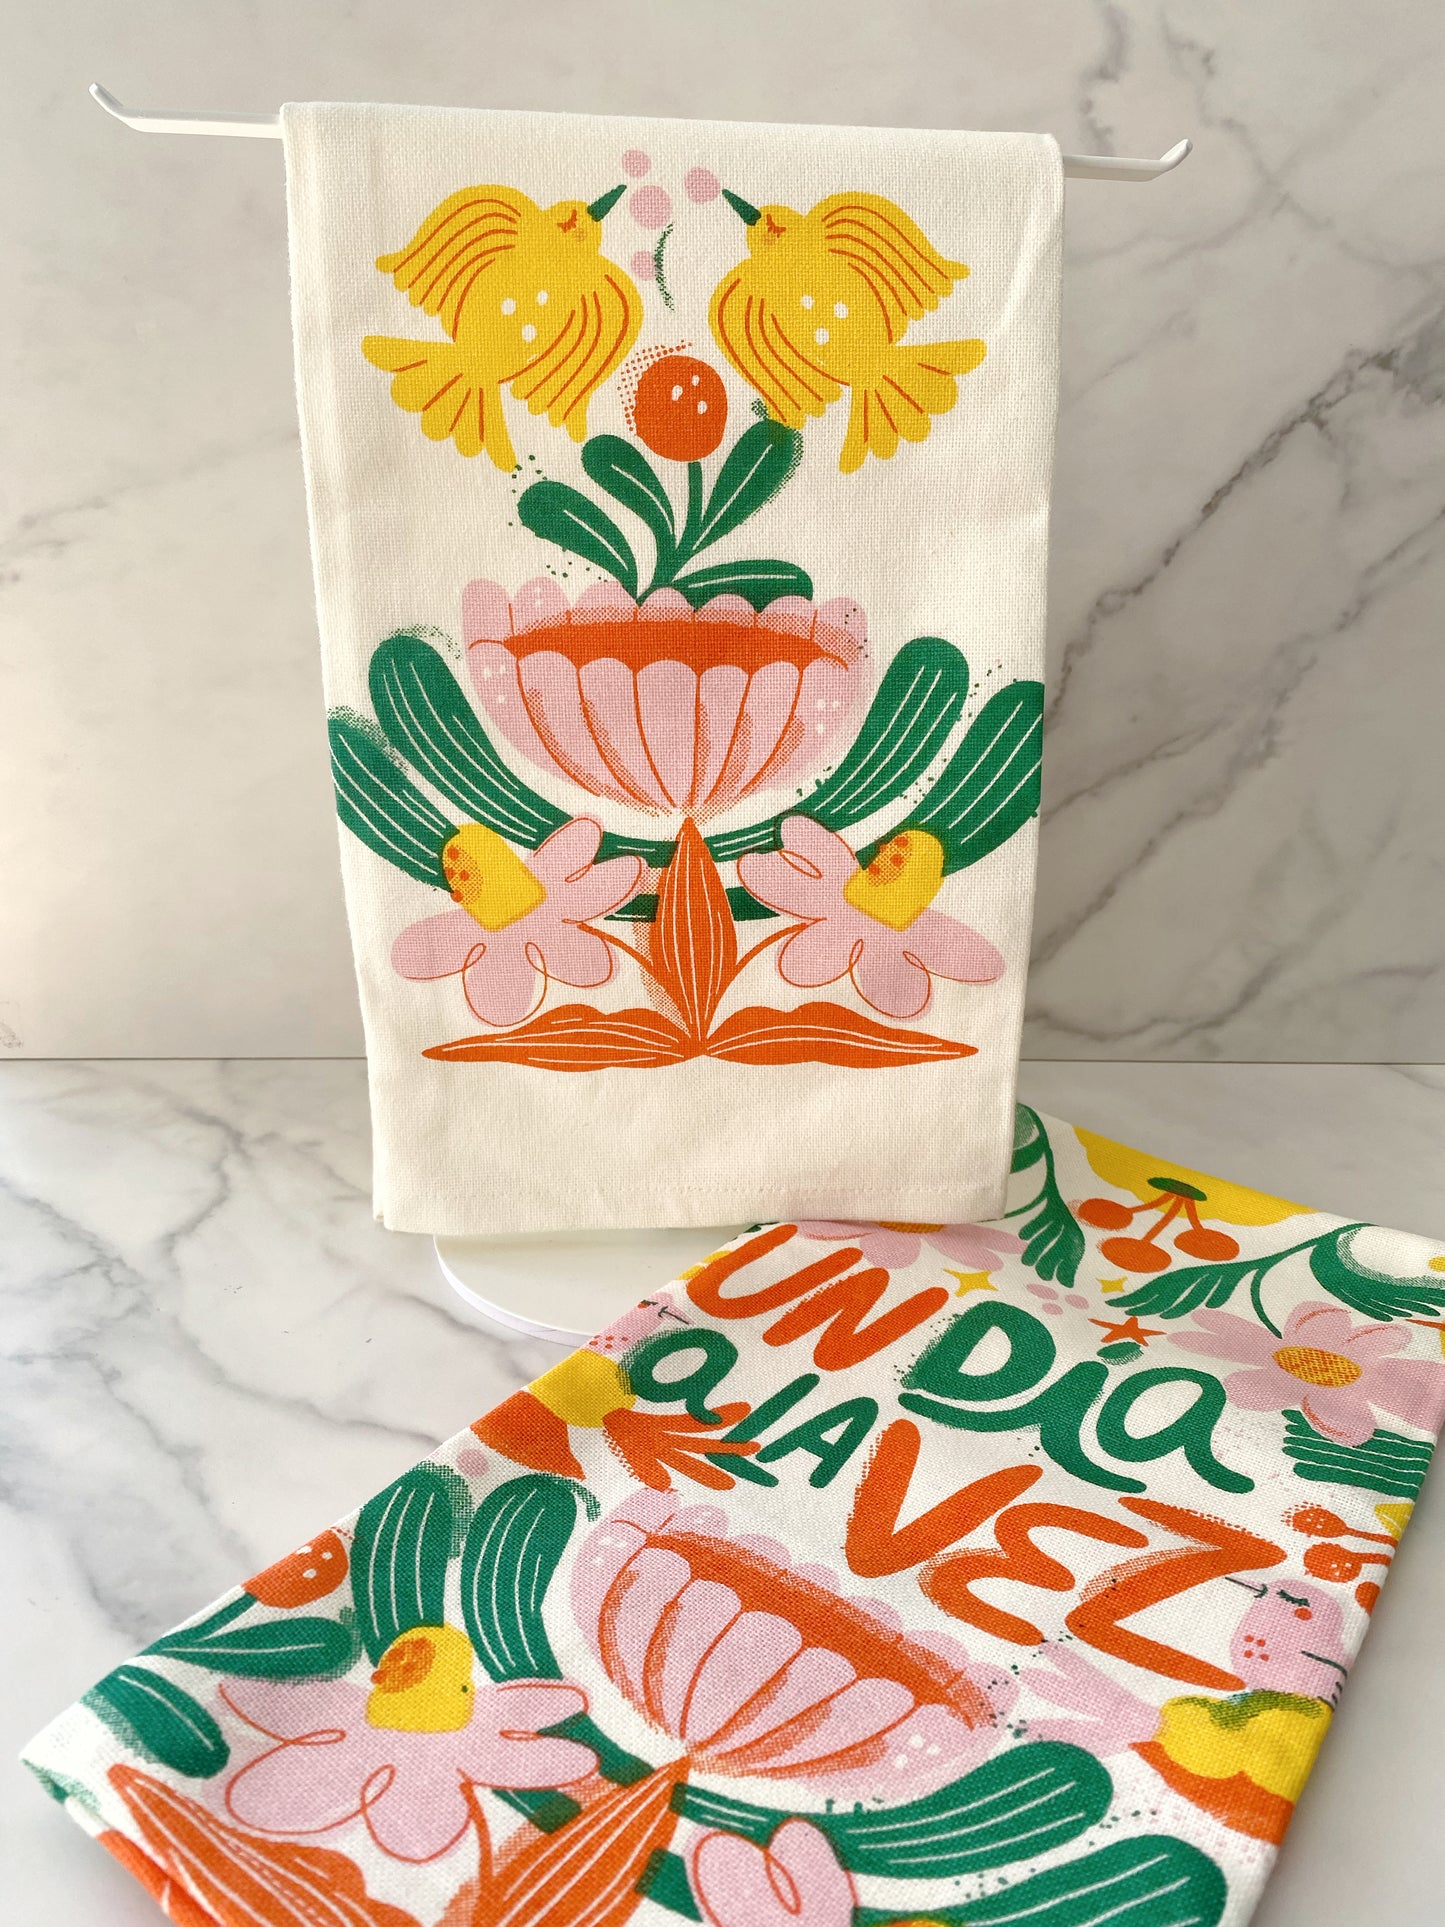 Un Dia A La Vez Tea Towels | One Day At A Time Tea Towels in Spanish